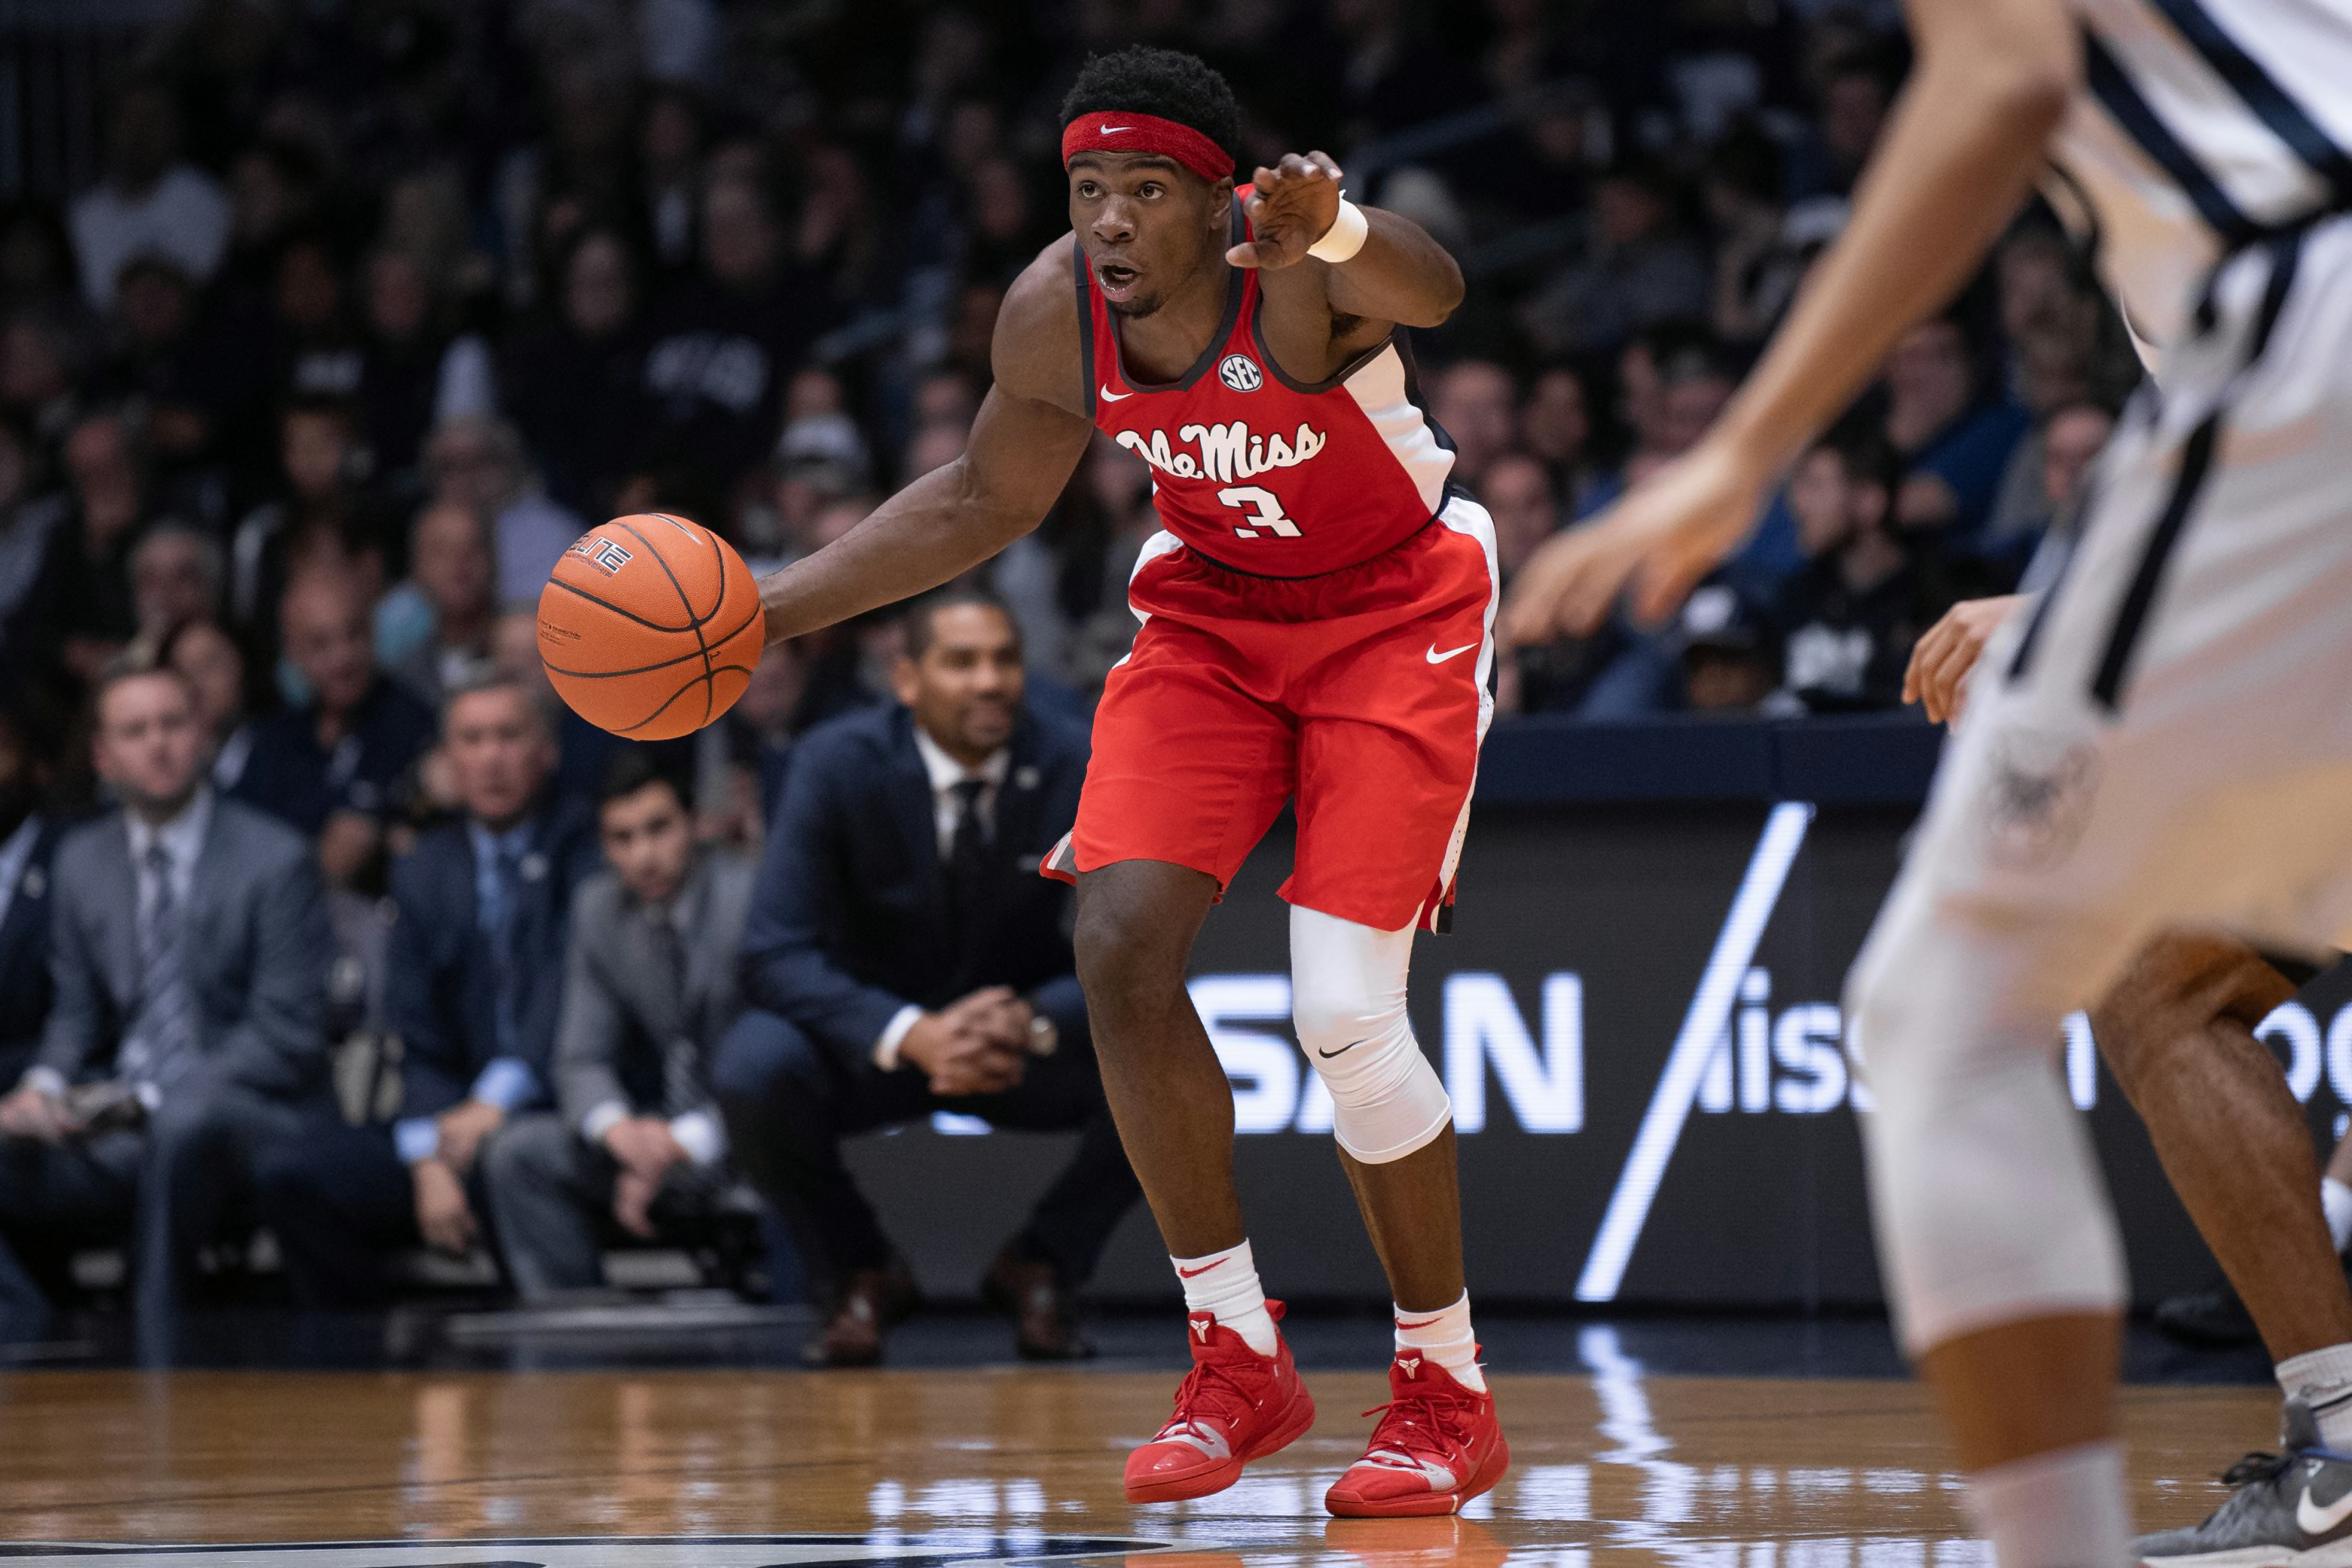 NBA Draft 2019 Prospect Watch: Mississippi's Terence Davis